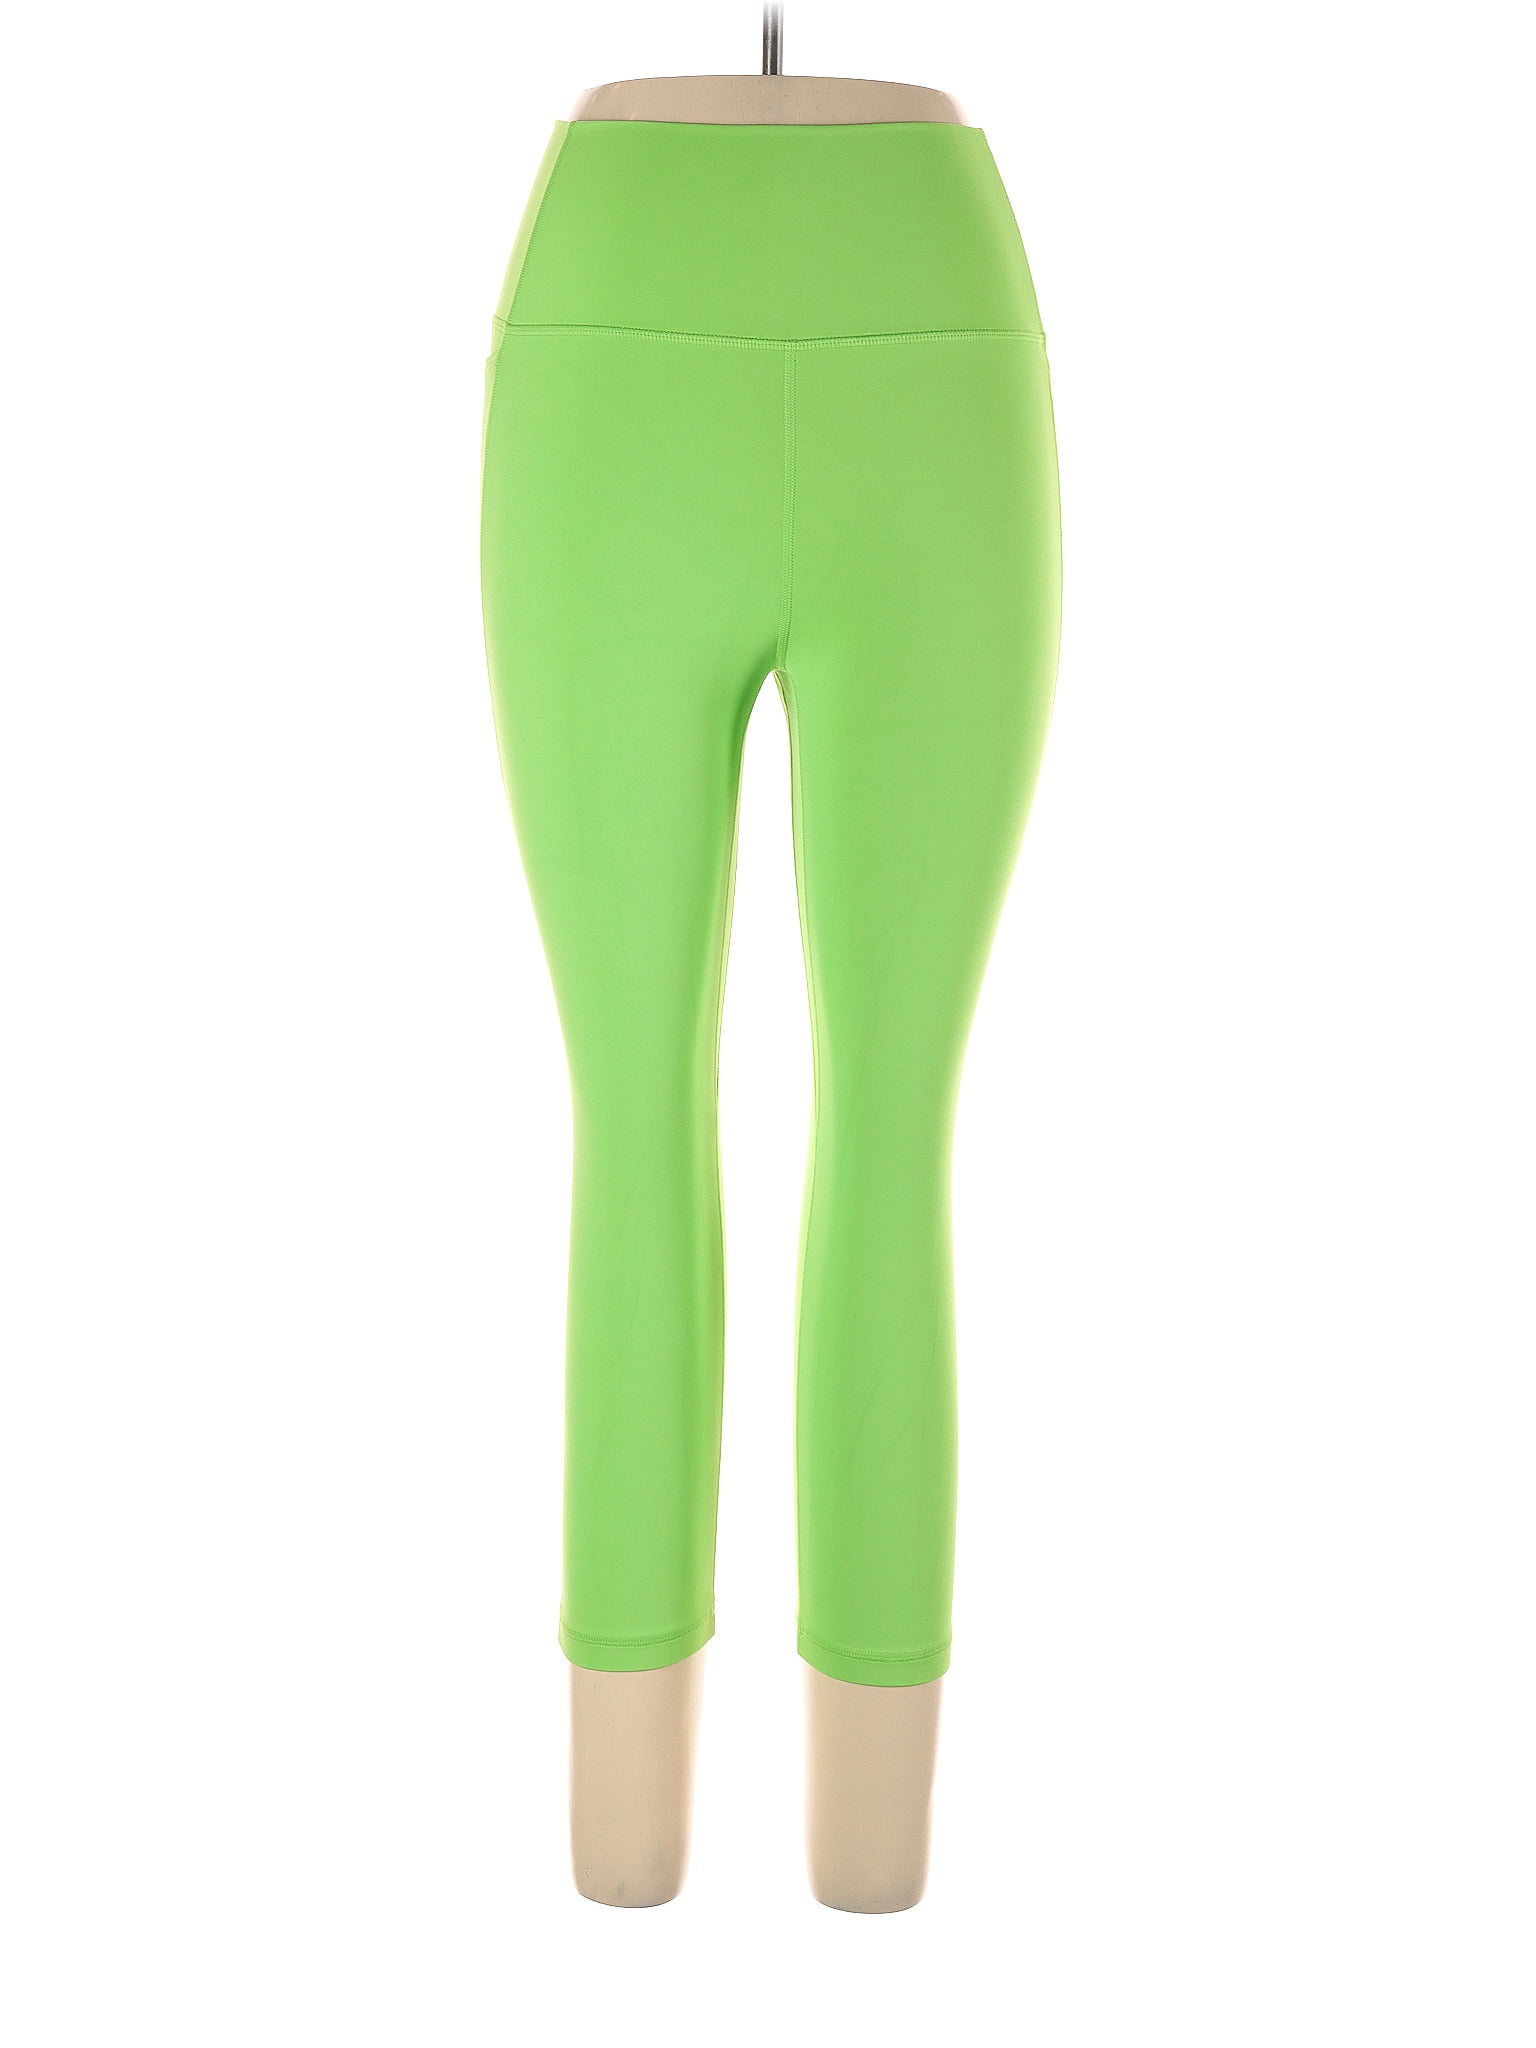 Crz Yoga Solid Green Leggings Size L - 50% off